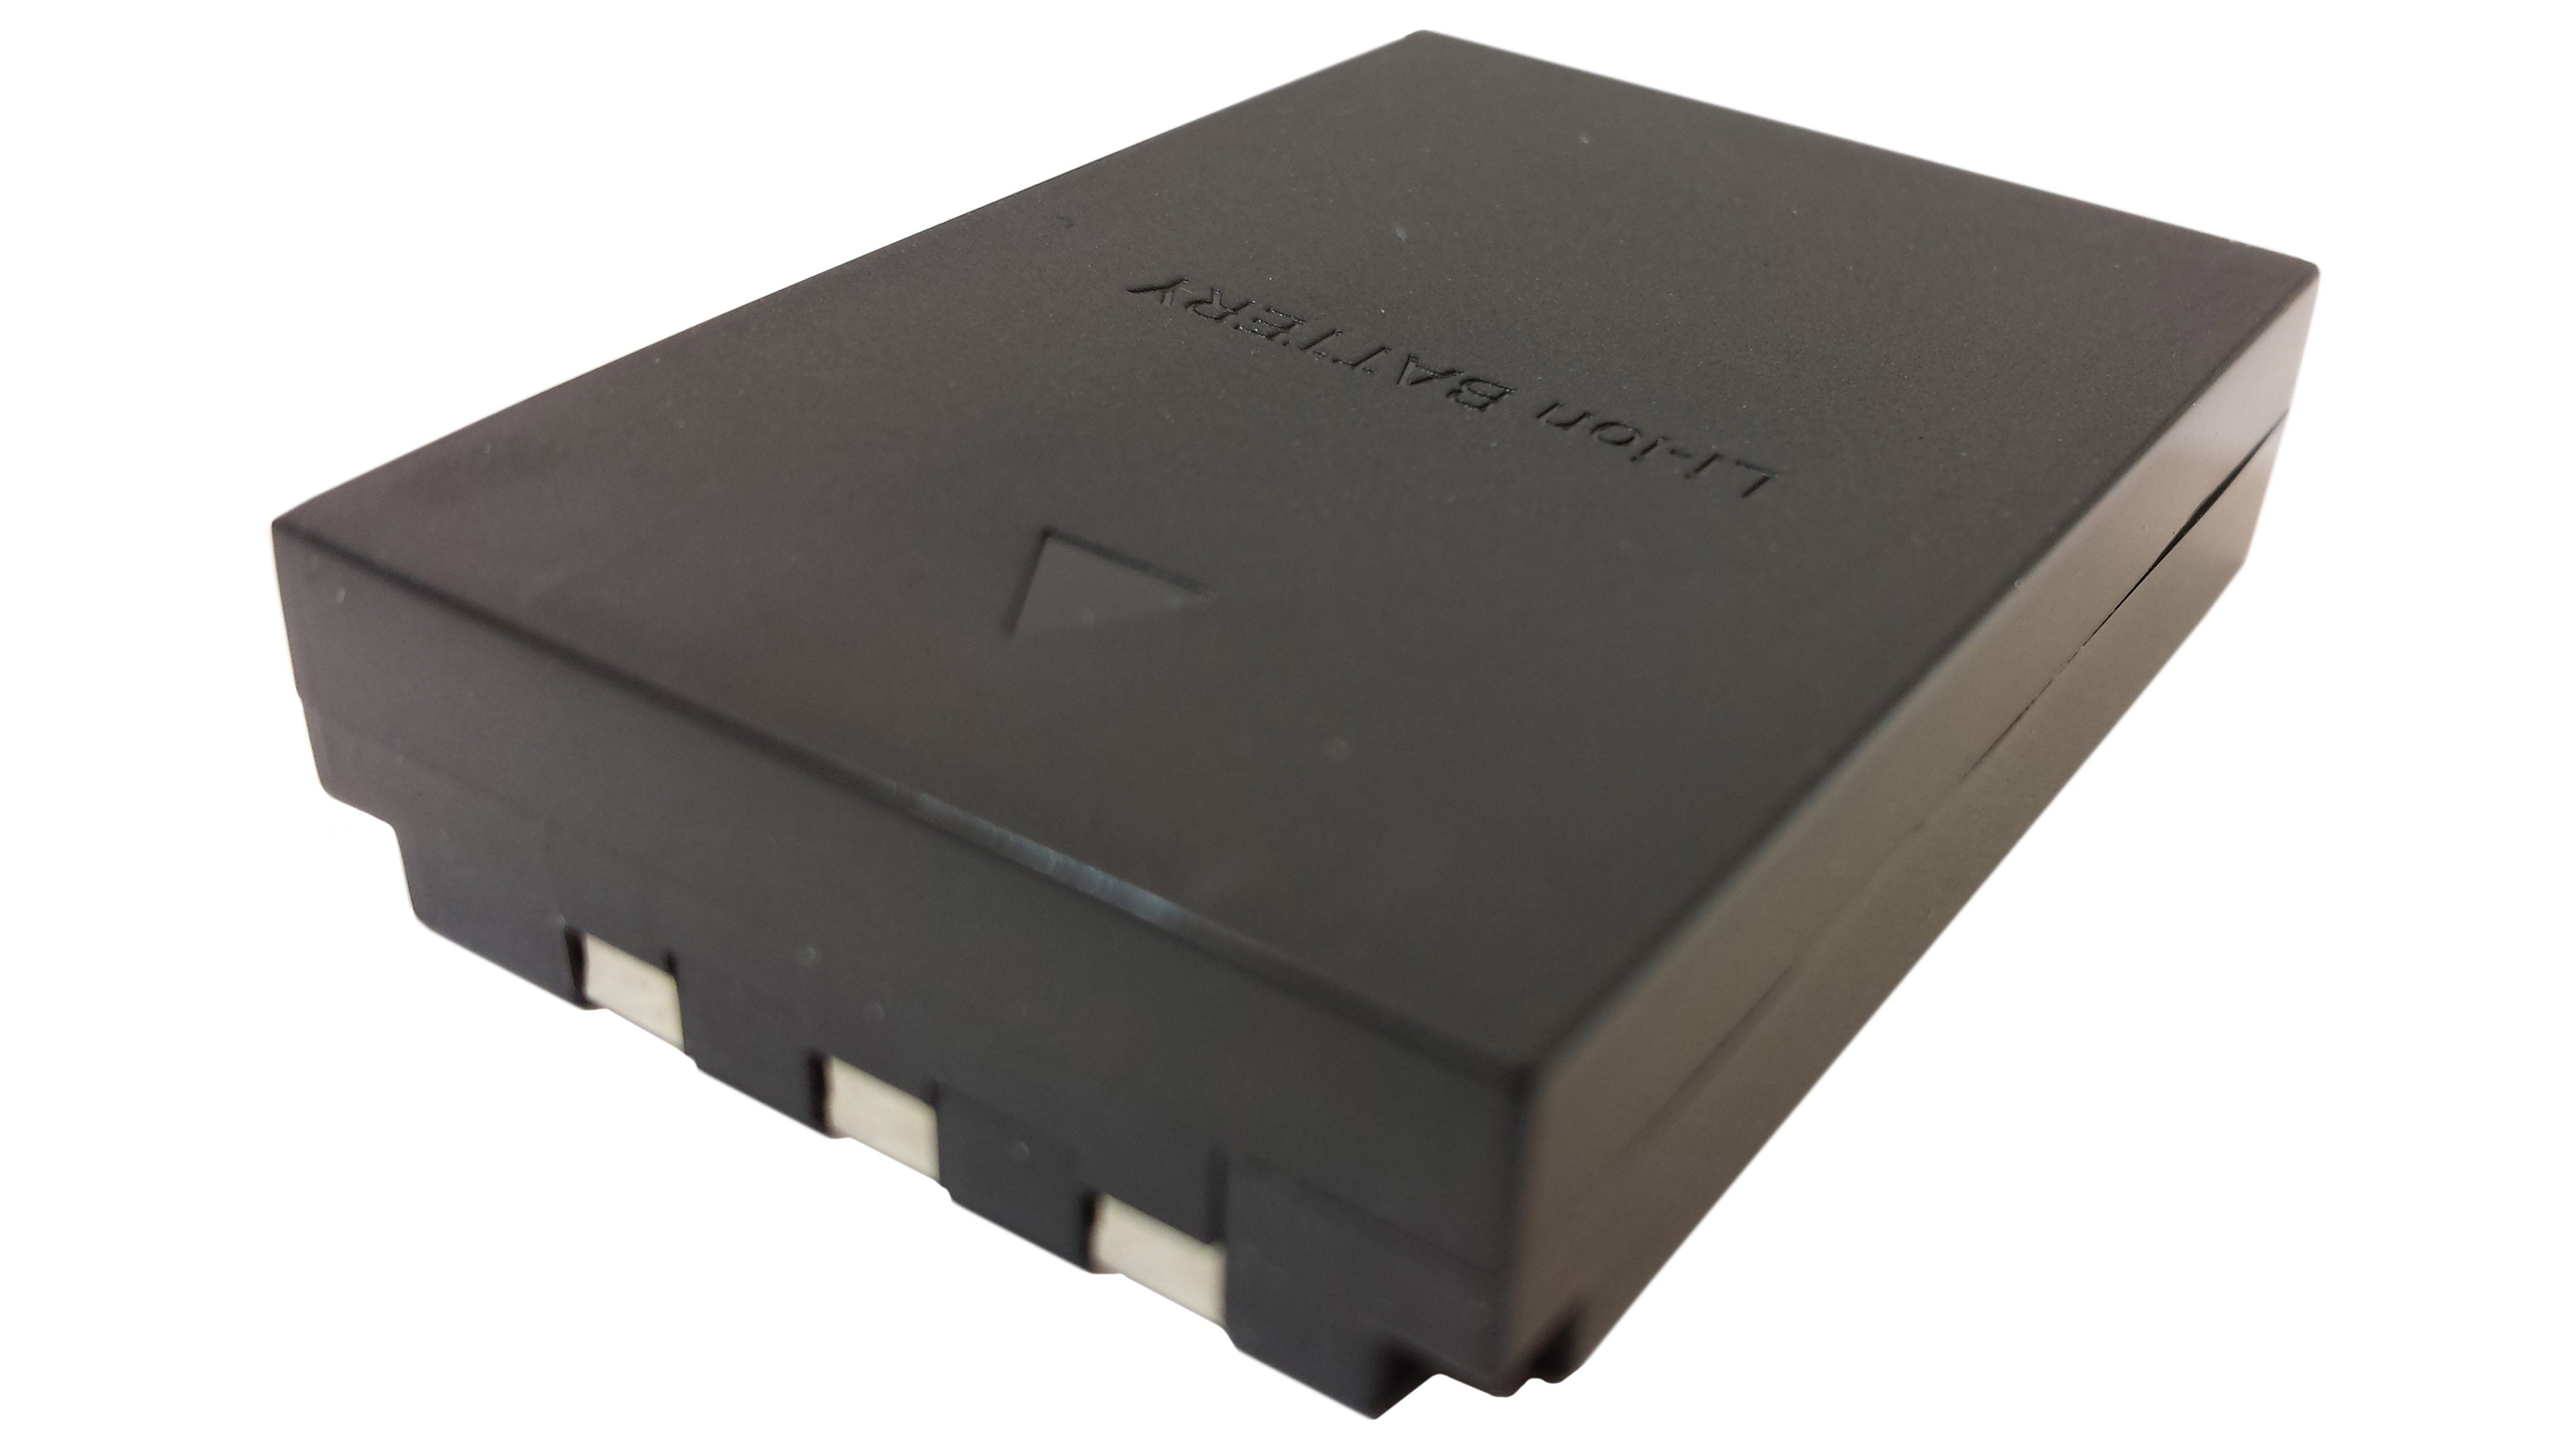 Ultra Hi-Capacity Works with Olympus MJU 800 Digital Digital Camera, li-ion, 3.7V, 1090 mAh Compatible with Olympus LI-10B Battery Synergy Digital Camera Battery